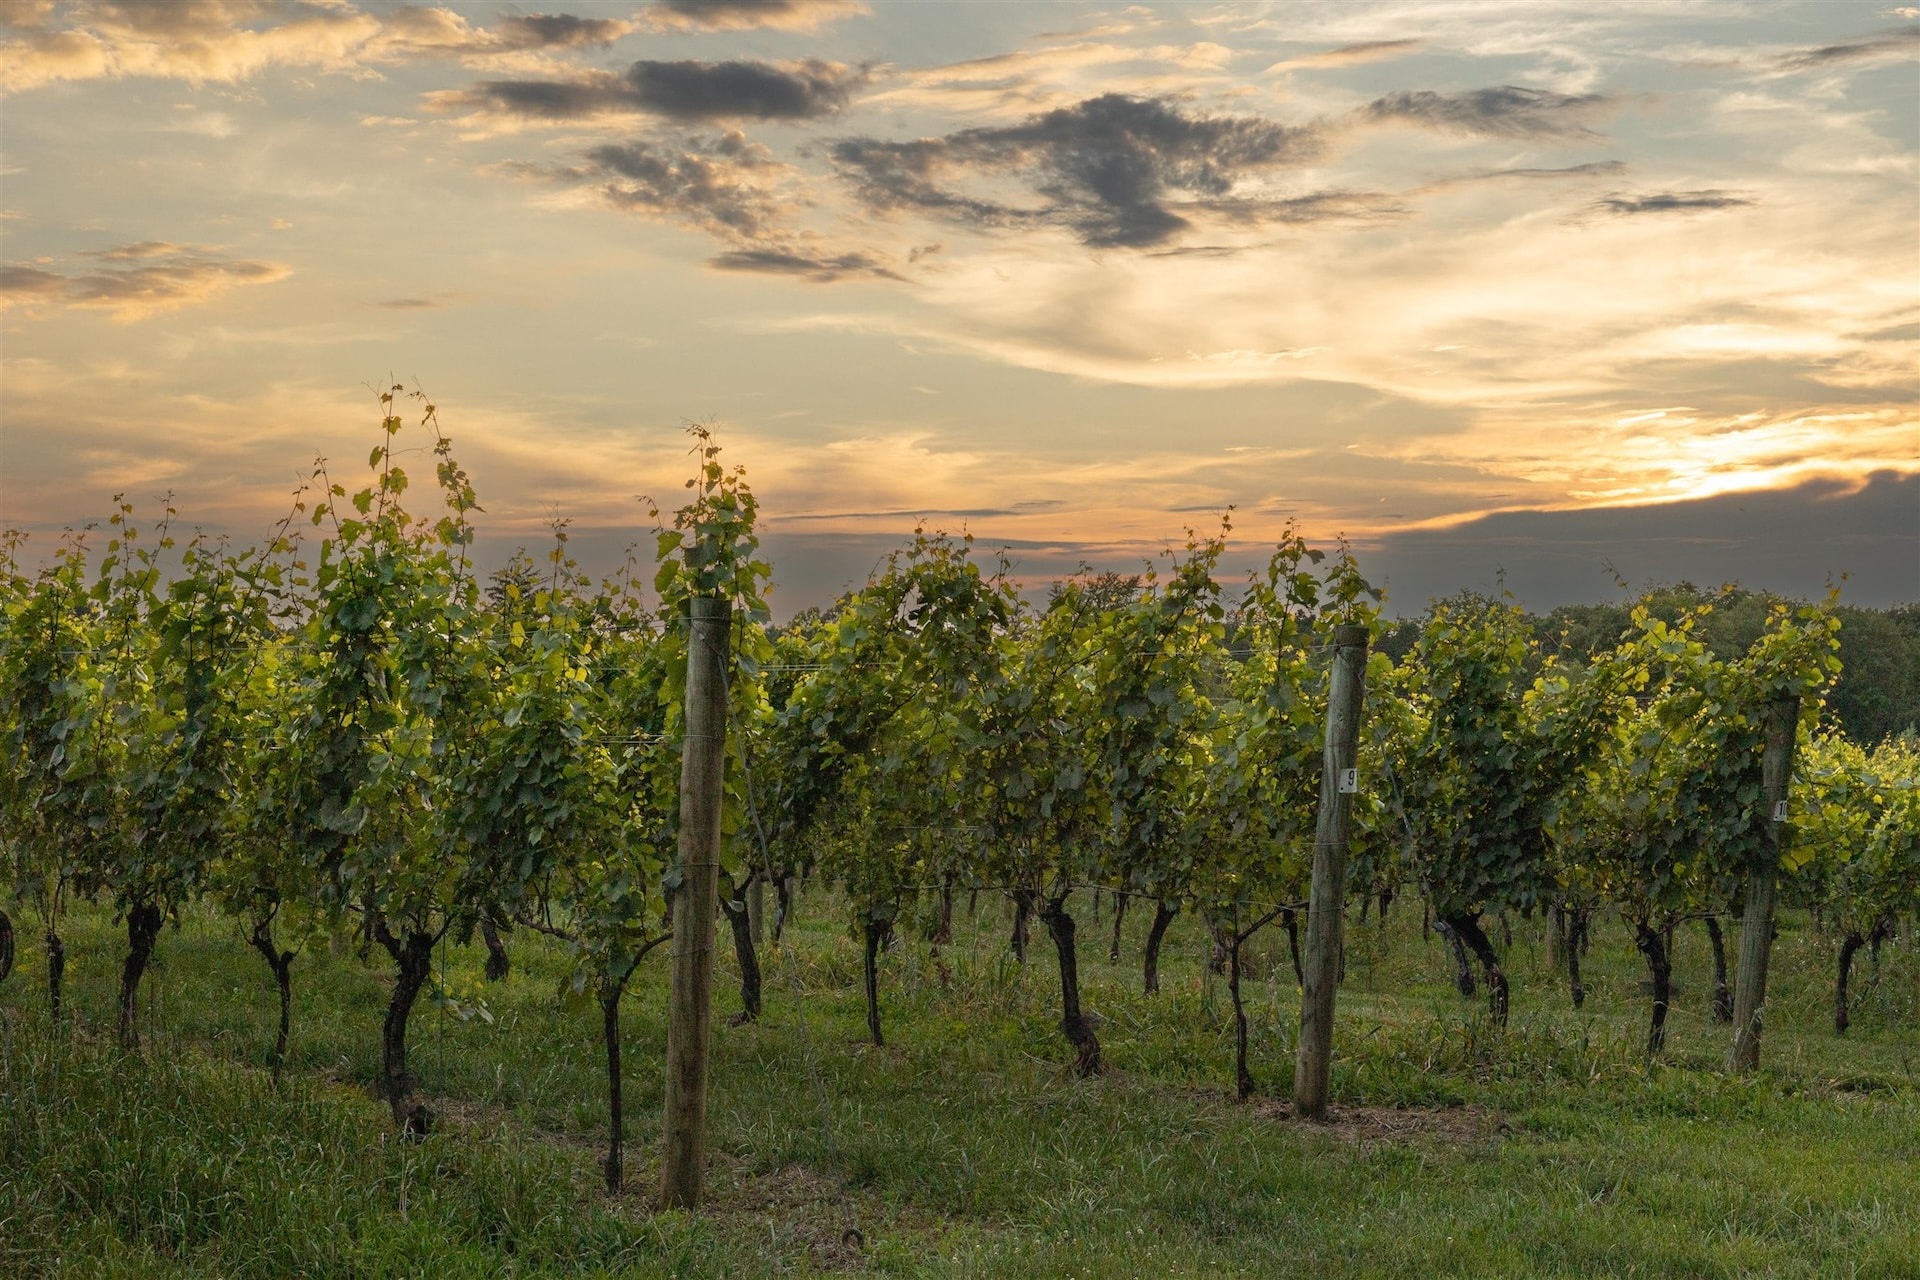 Penns Woods Winery vineyard grapes vines sunset sky